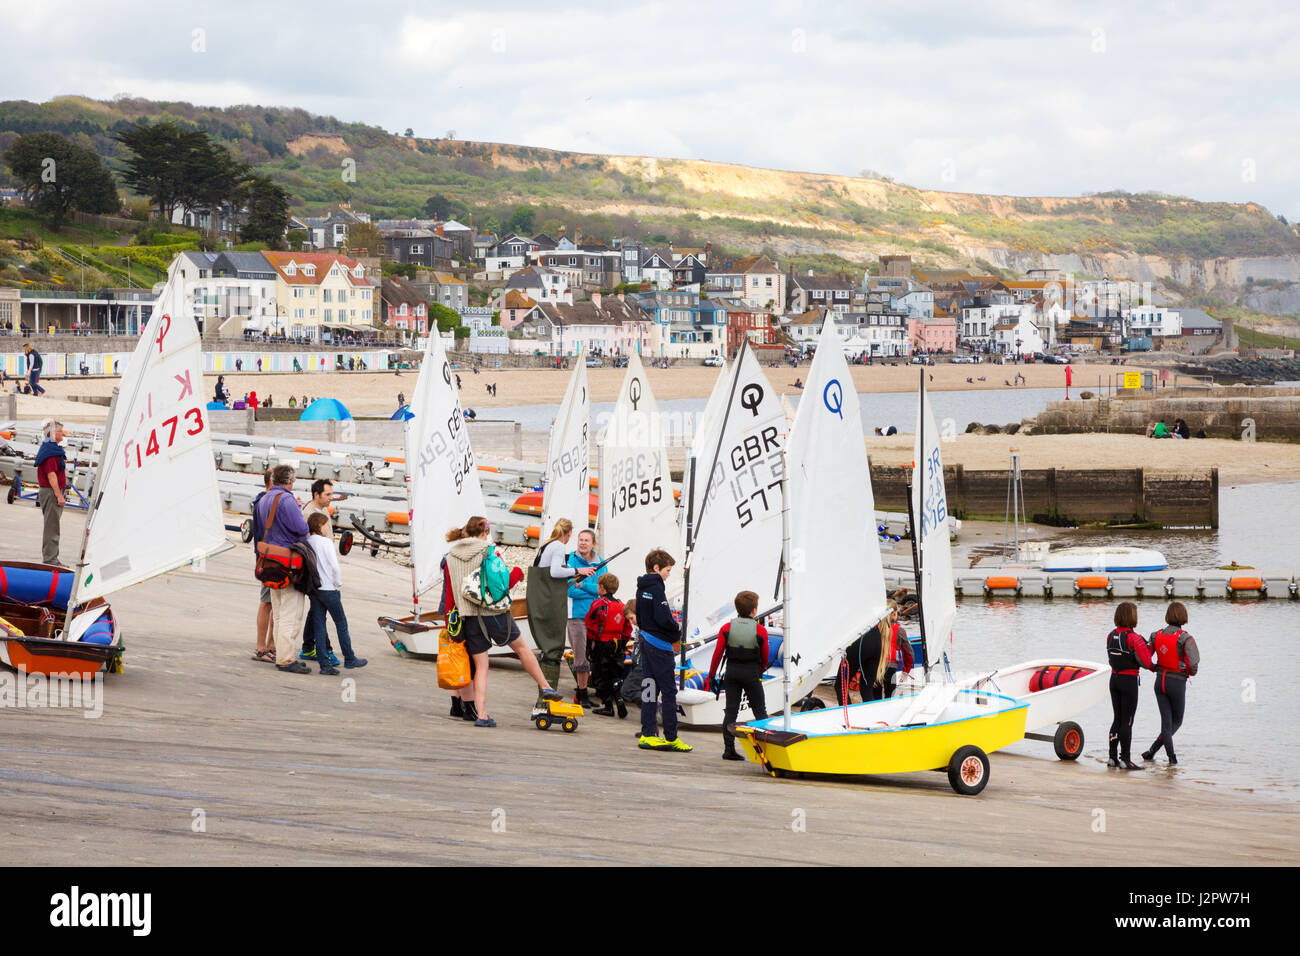 Children doing sport - children learning to sail in dinghies, Lyme Regis Harbour, Dorset England UK Stock Photo